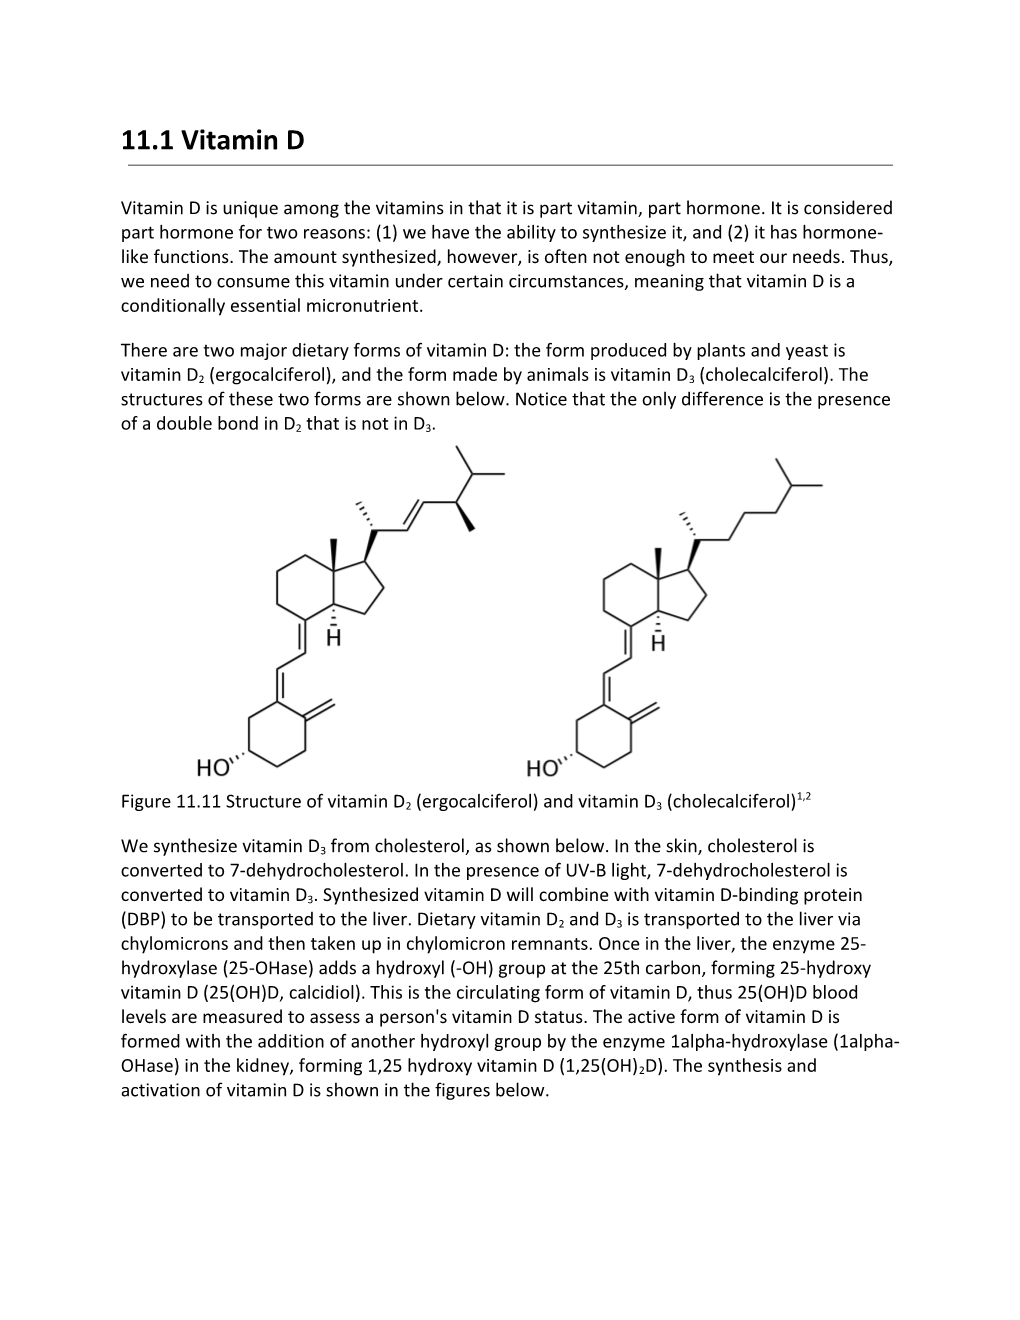 Figure 11.11 Structure of Vitamin D2 (Ergocalciferol) and Vitamin D3 (Cholecalciferol)1,2